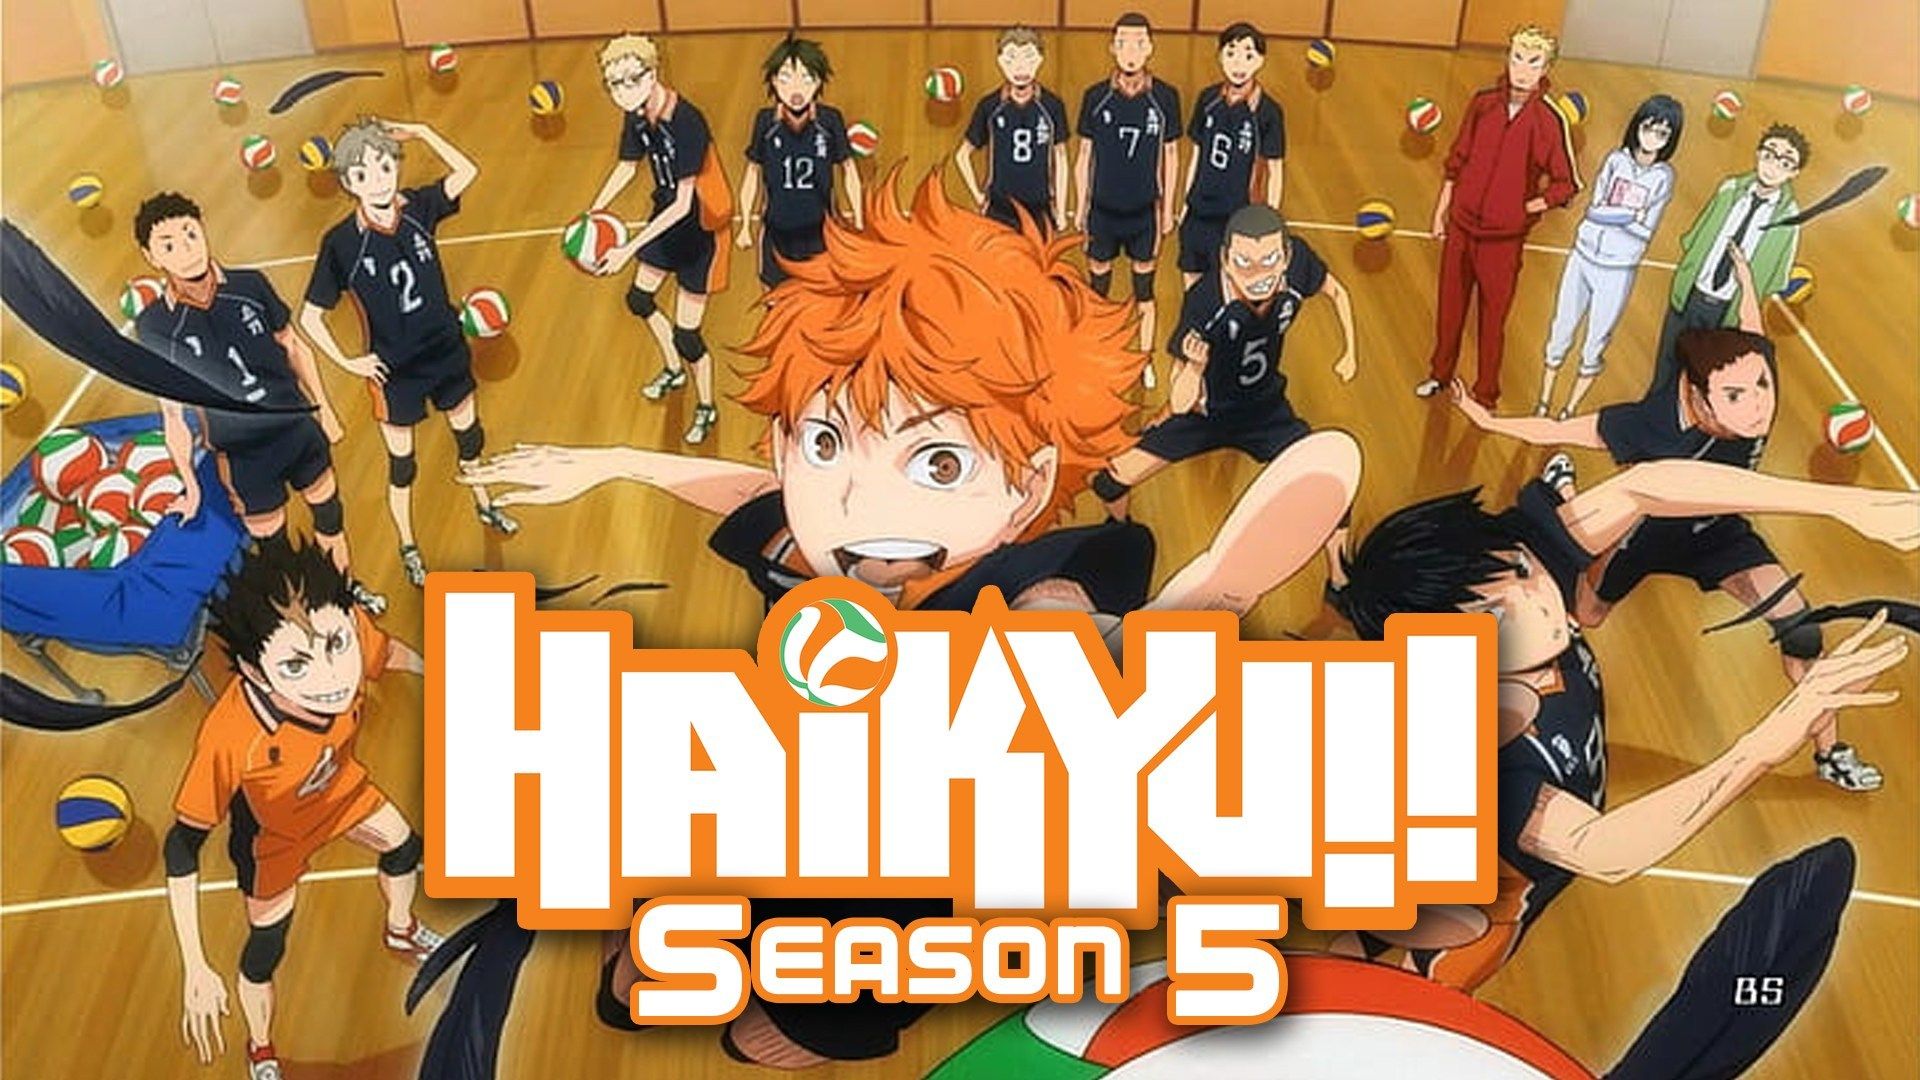 Haikyuu Season 5 Wallpapers - Top 25 Best Haikyuu!! Season 5